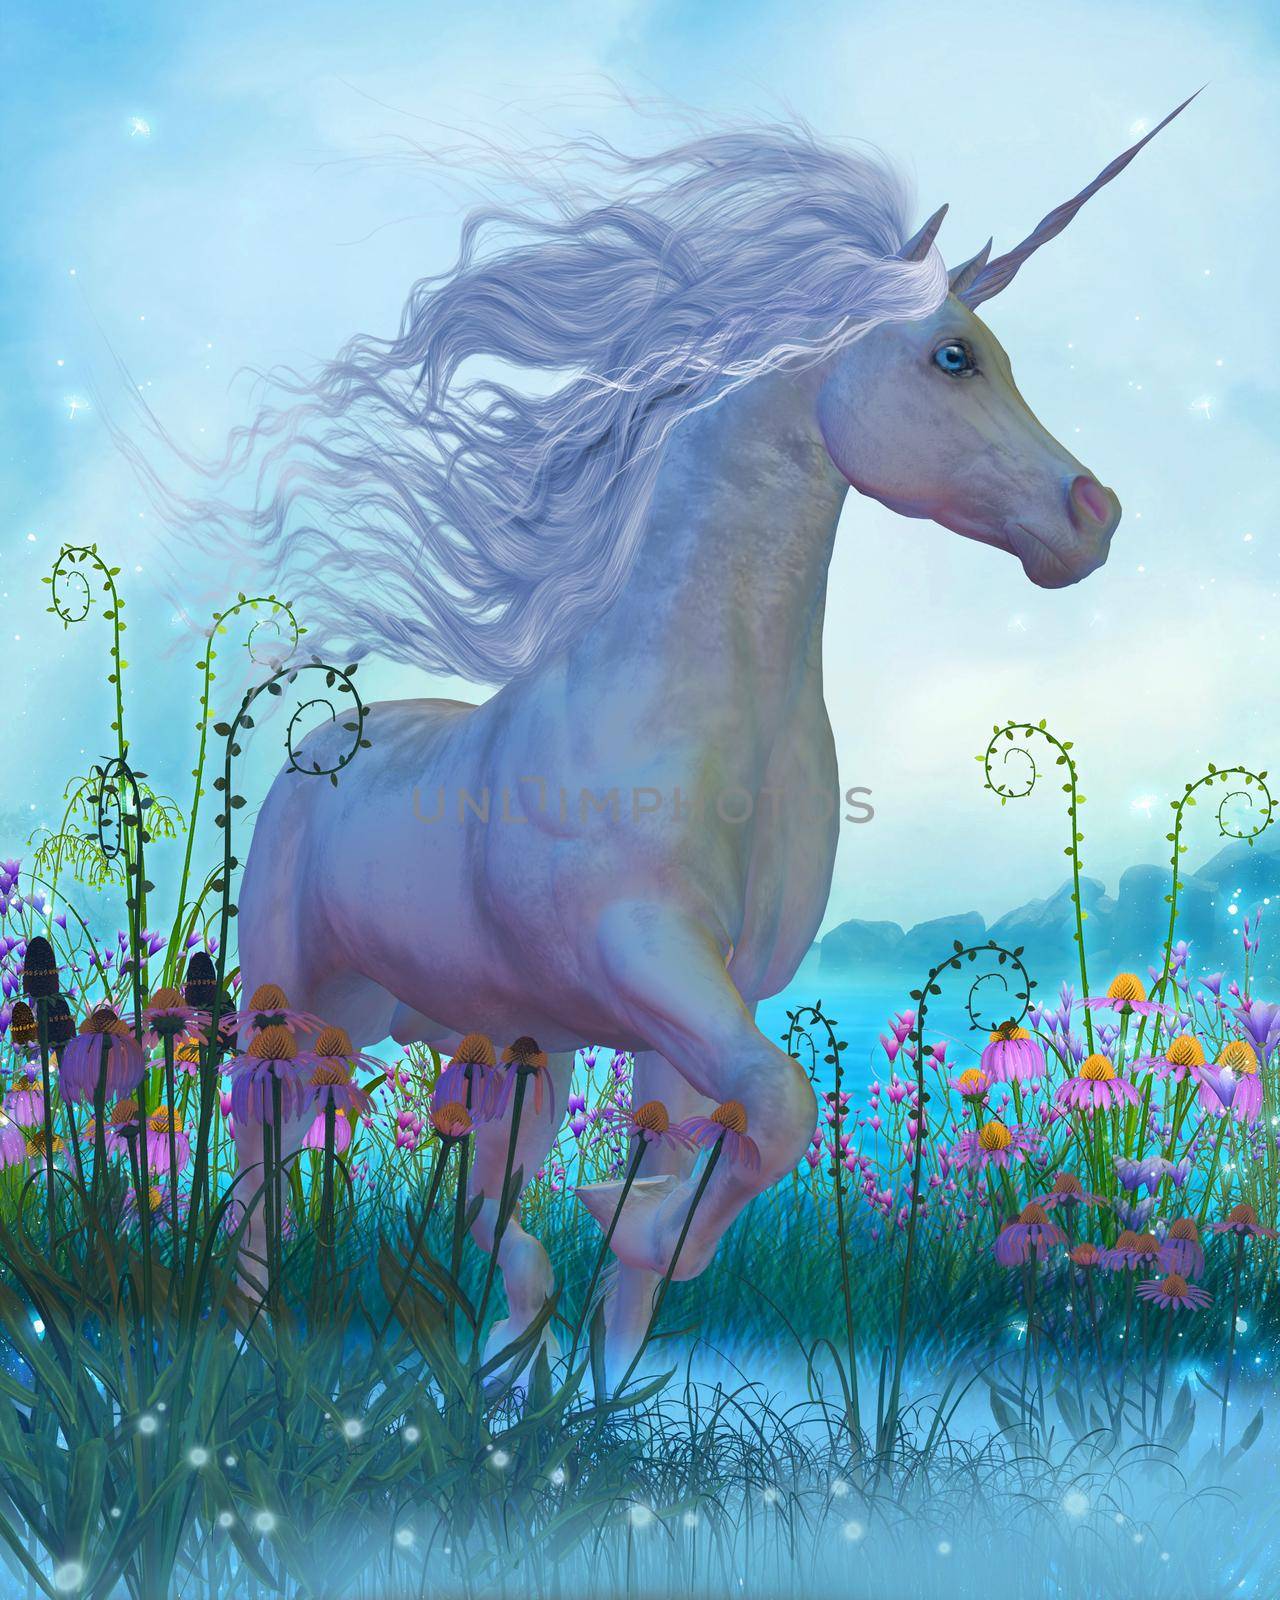 A white Unicorn stallion walks through a garden full of flowers and plants.